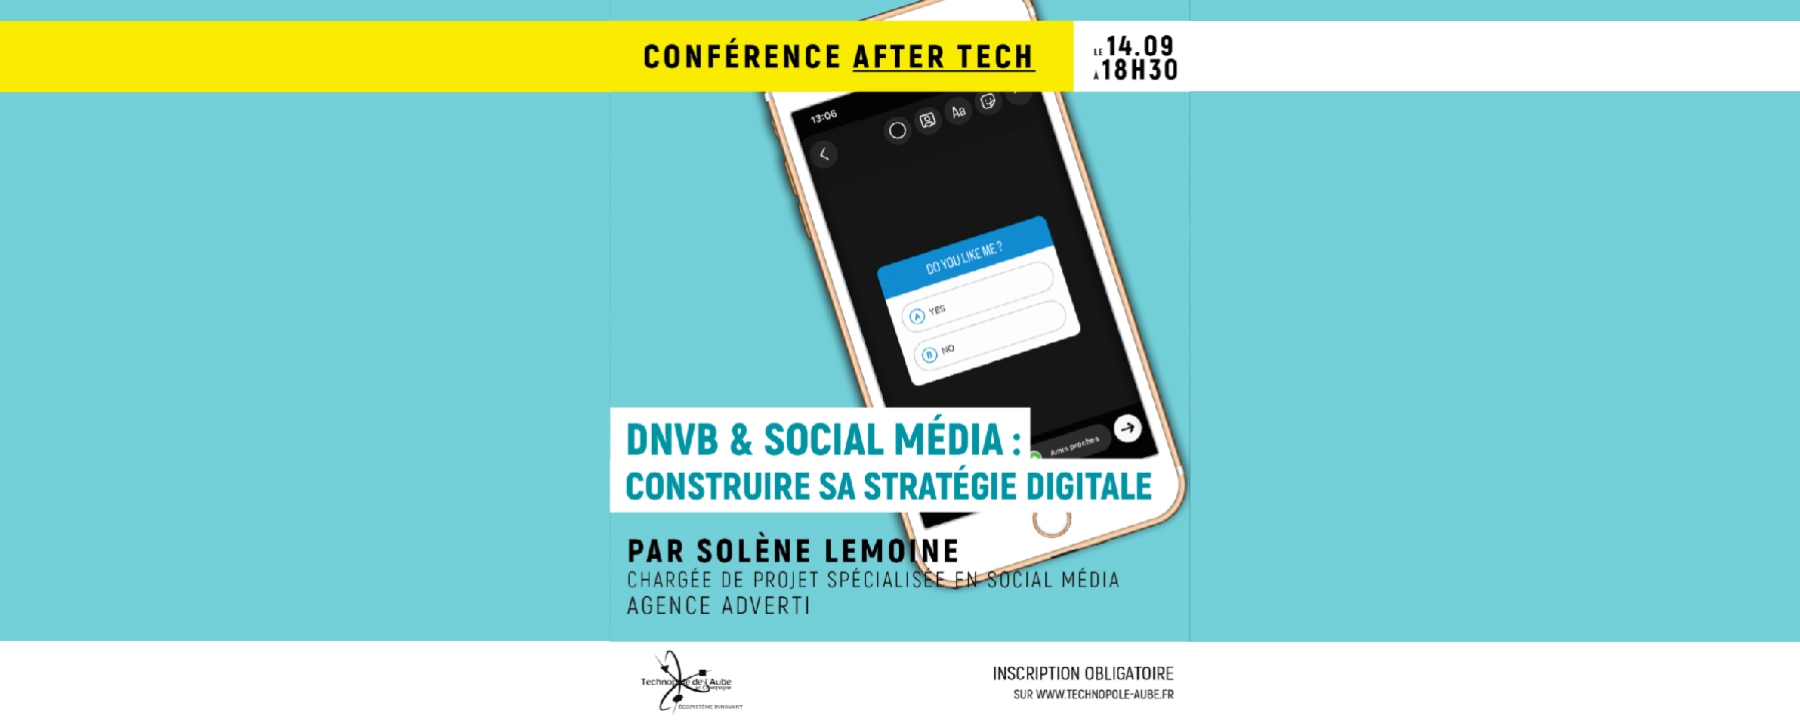 DNVB & Social Media : construire sa stratégie digitale